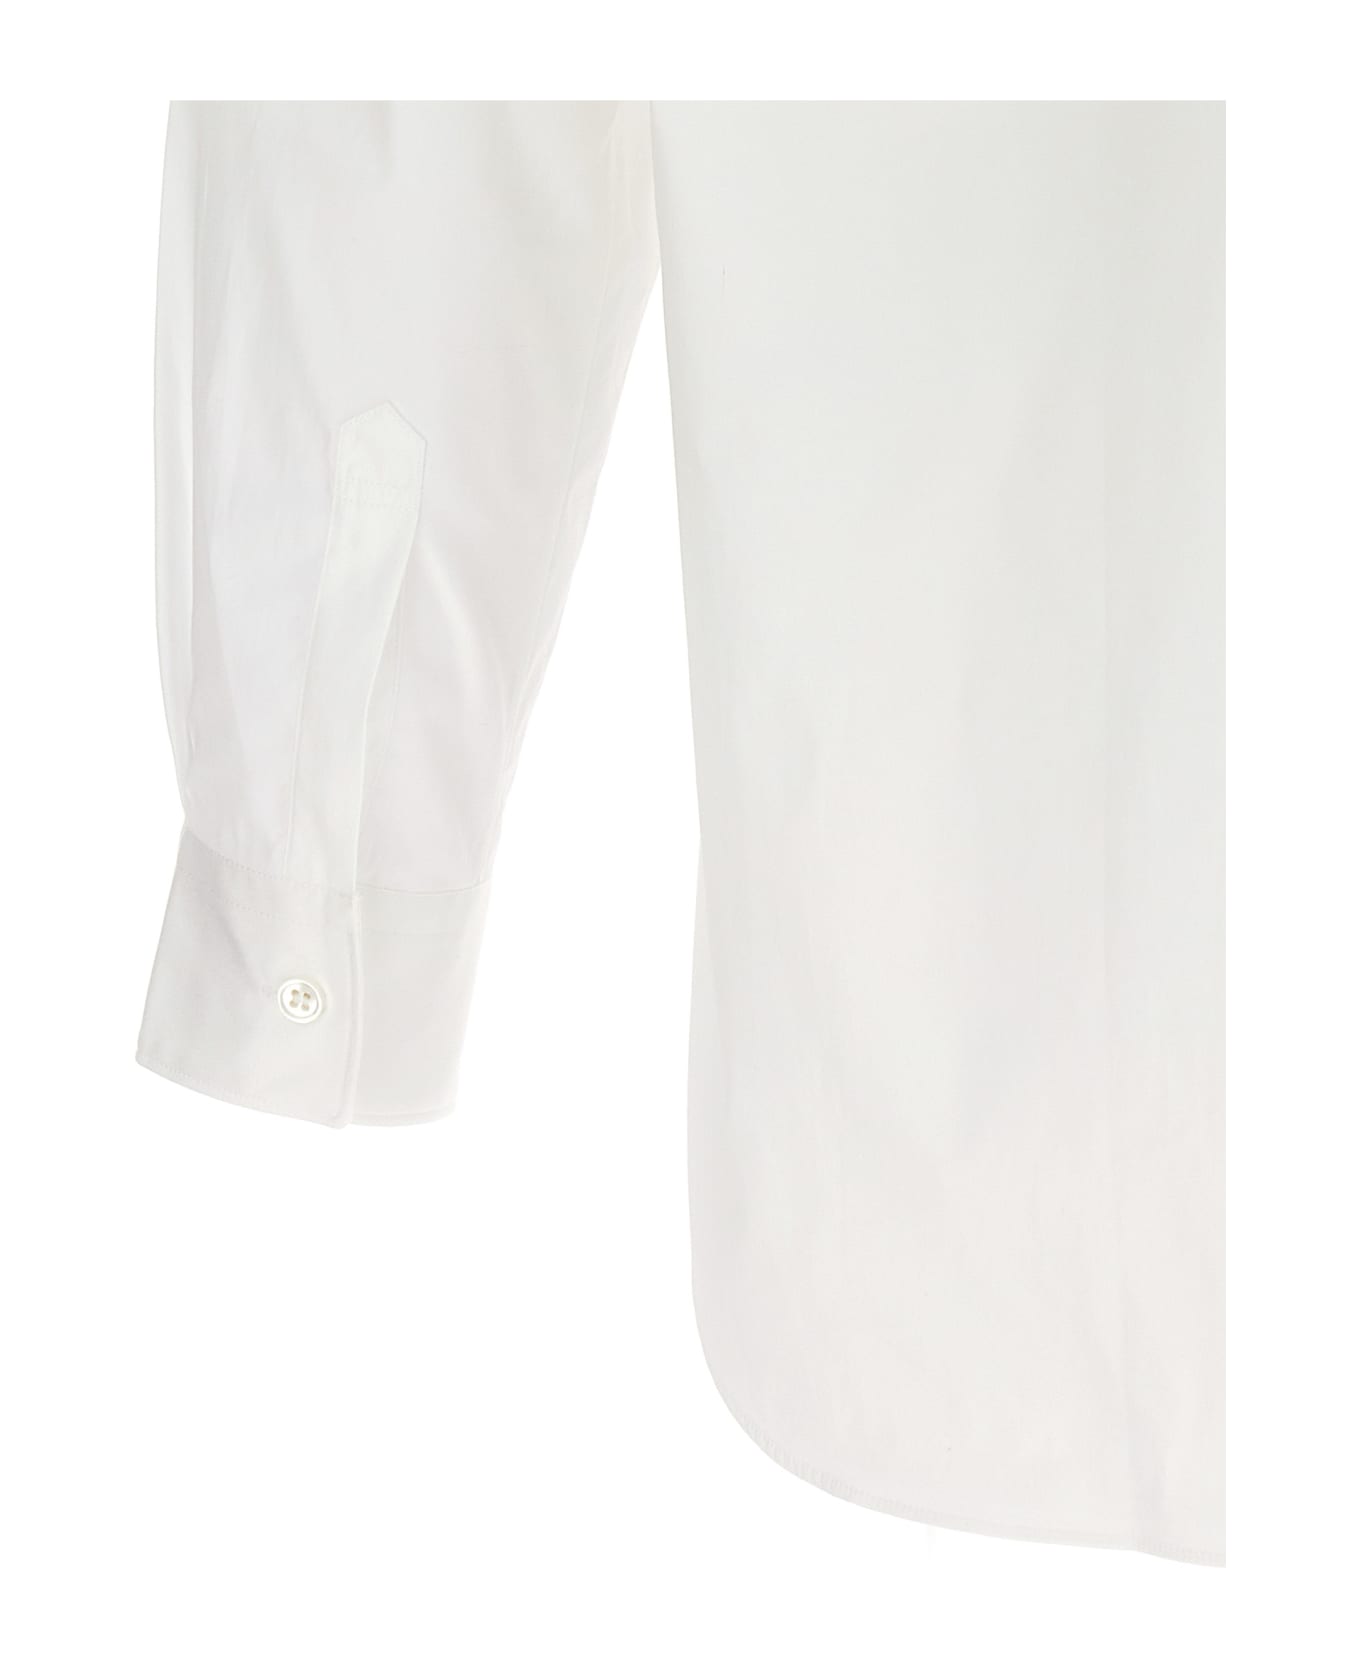 Comme des Garçons Shirt X Brett Westfall Mushroom Shirt - White